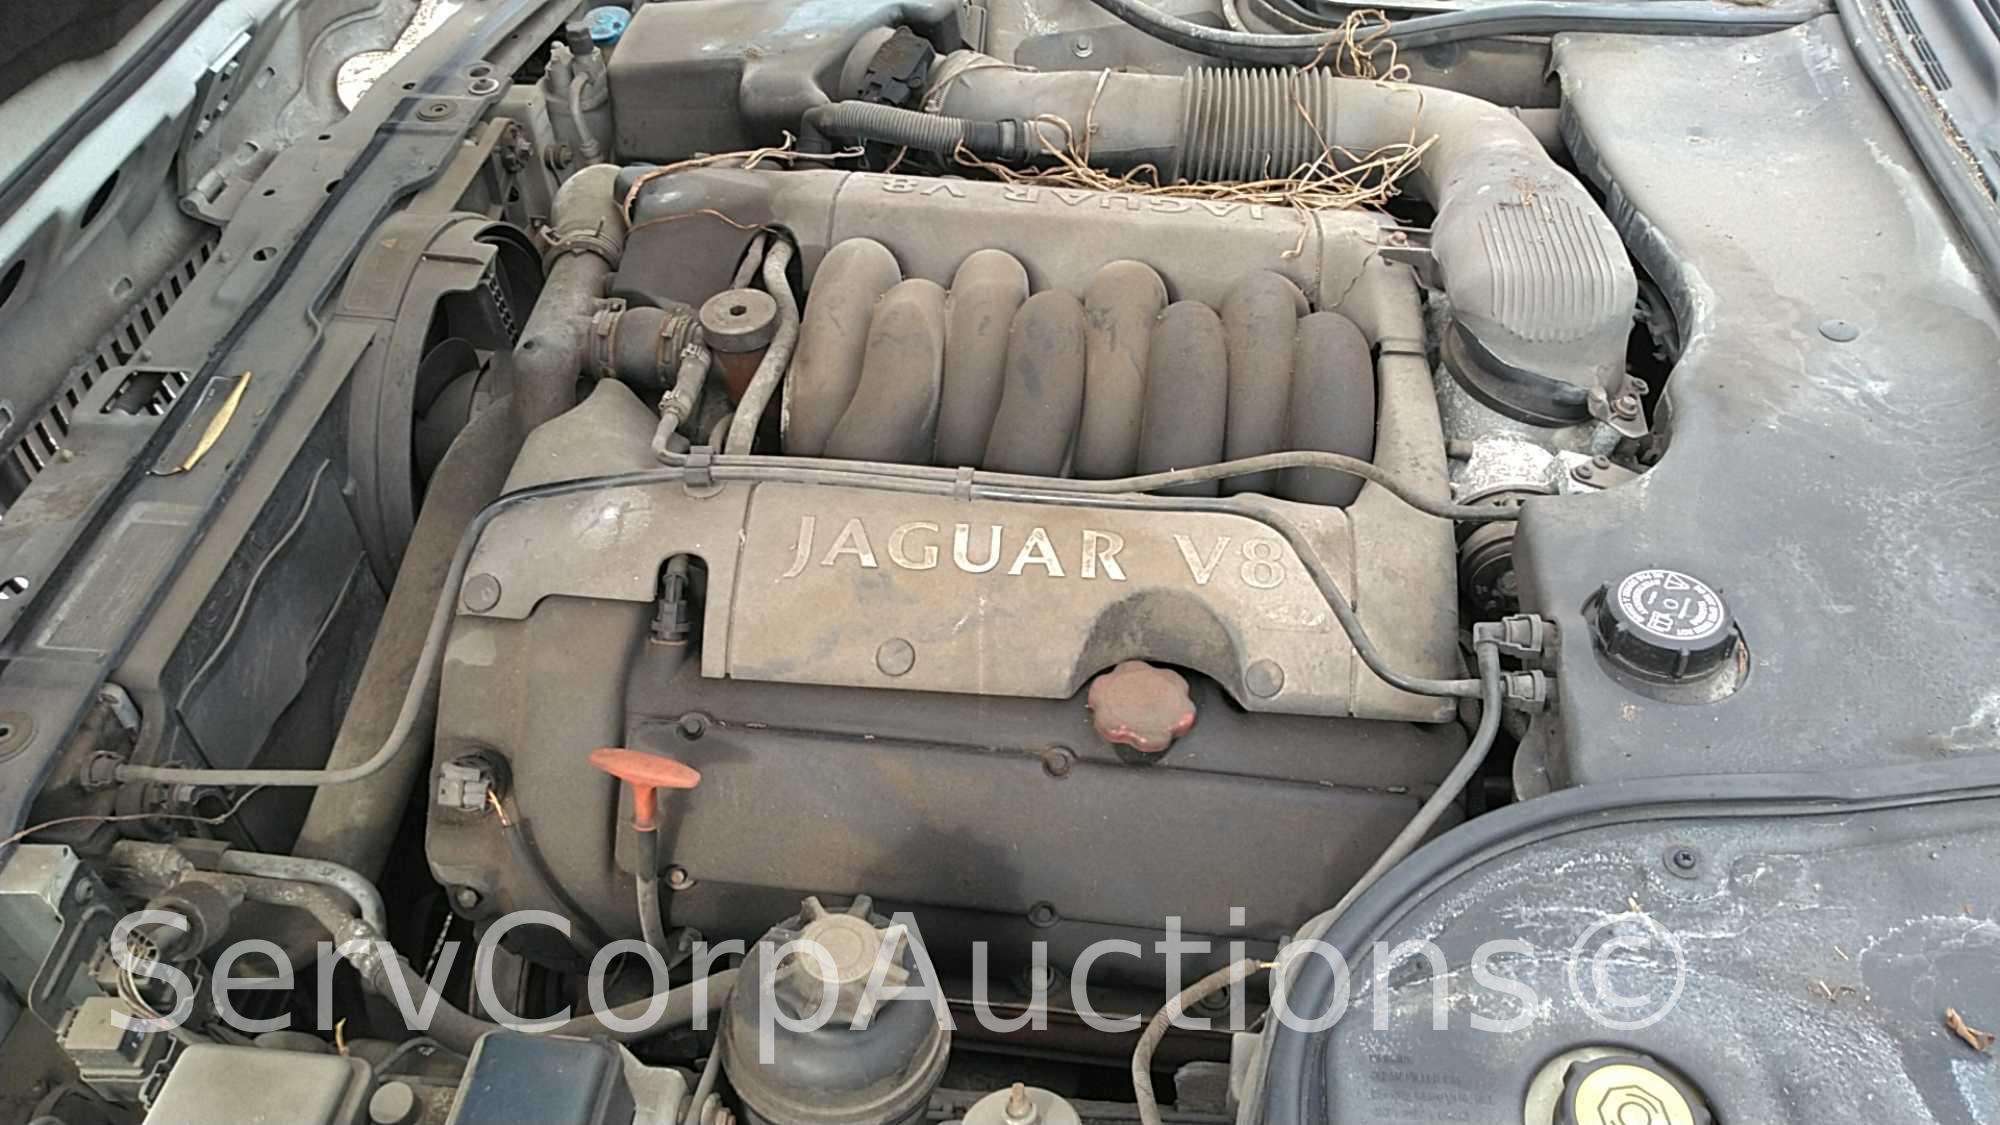 1999 Jaguar XJ8 Passenger Car, VIN # SAJHX104XXC855791